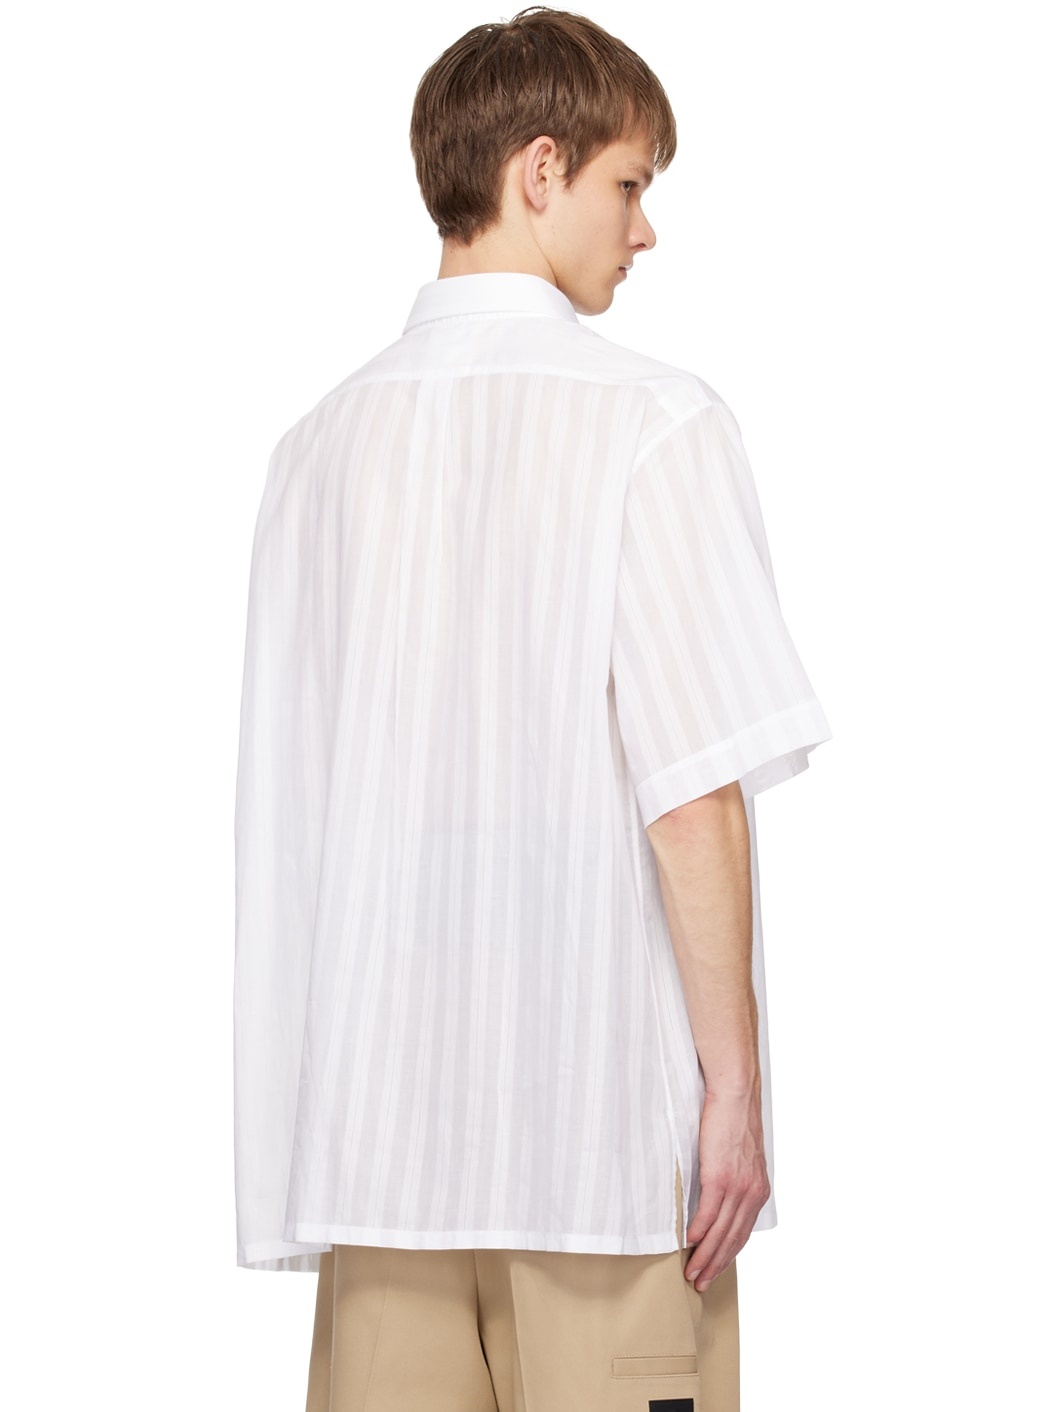 White Striped Shirt - 3